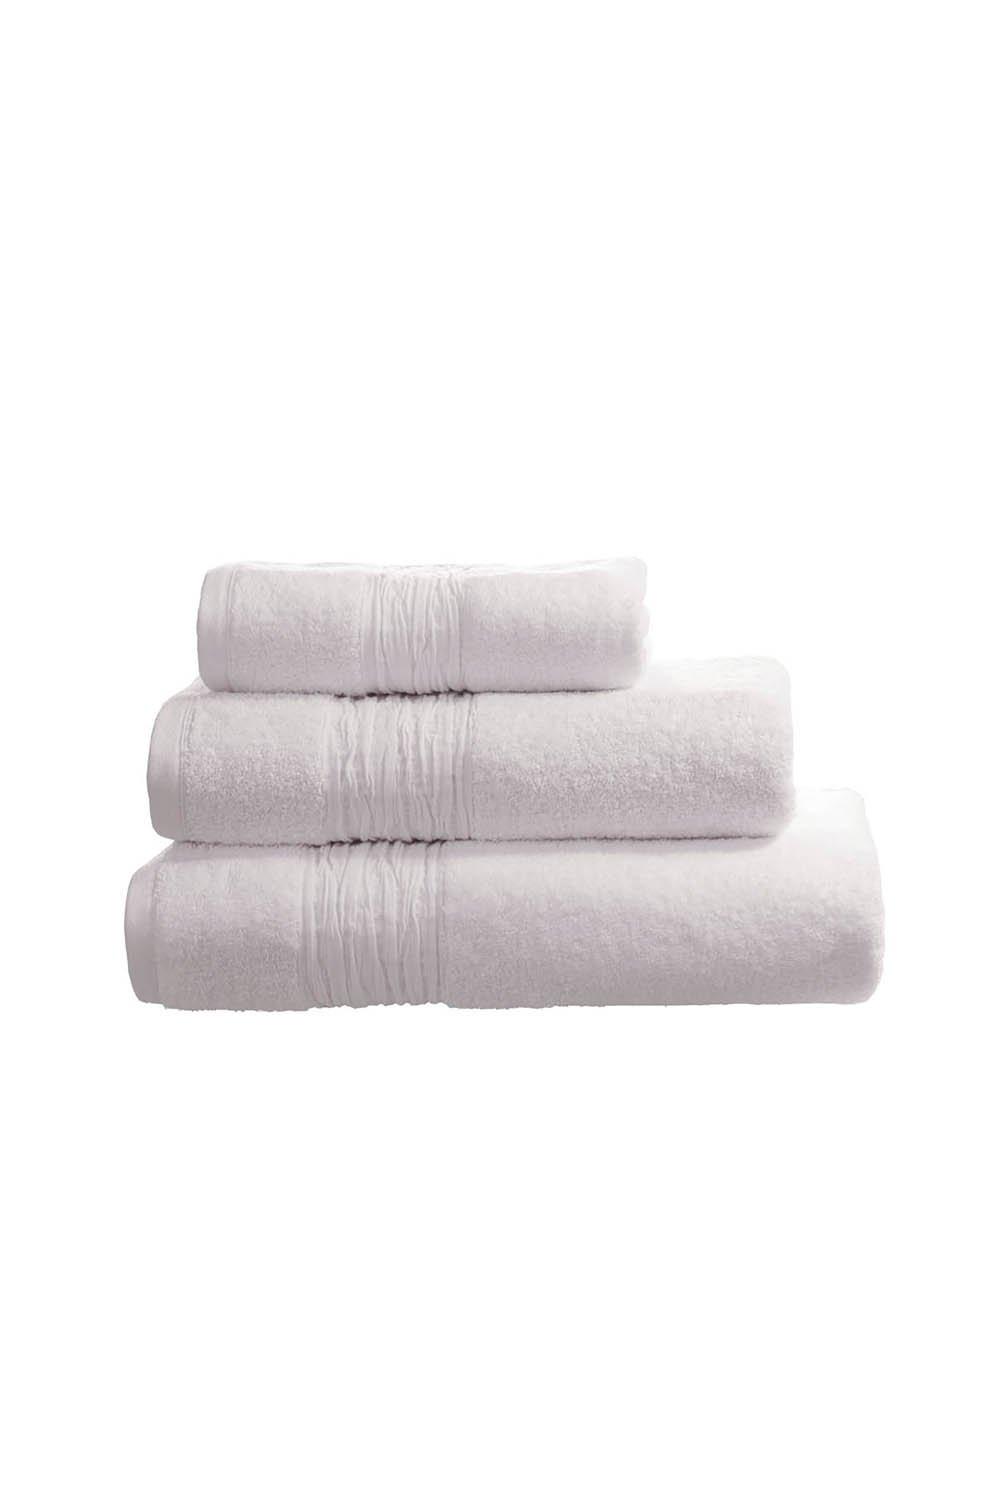 Turkish Cotton With Linen Blend Insert Border 600gsm 4 Piece Towel Bale